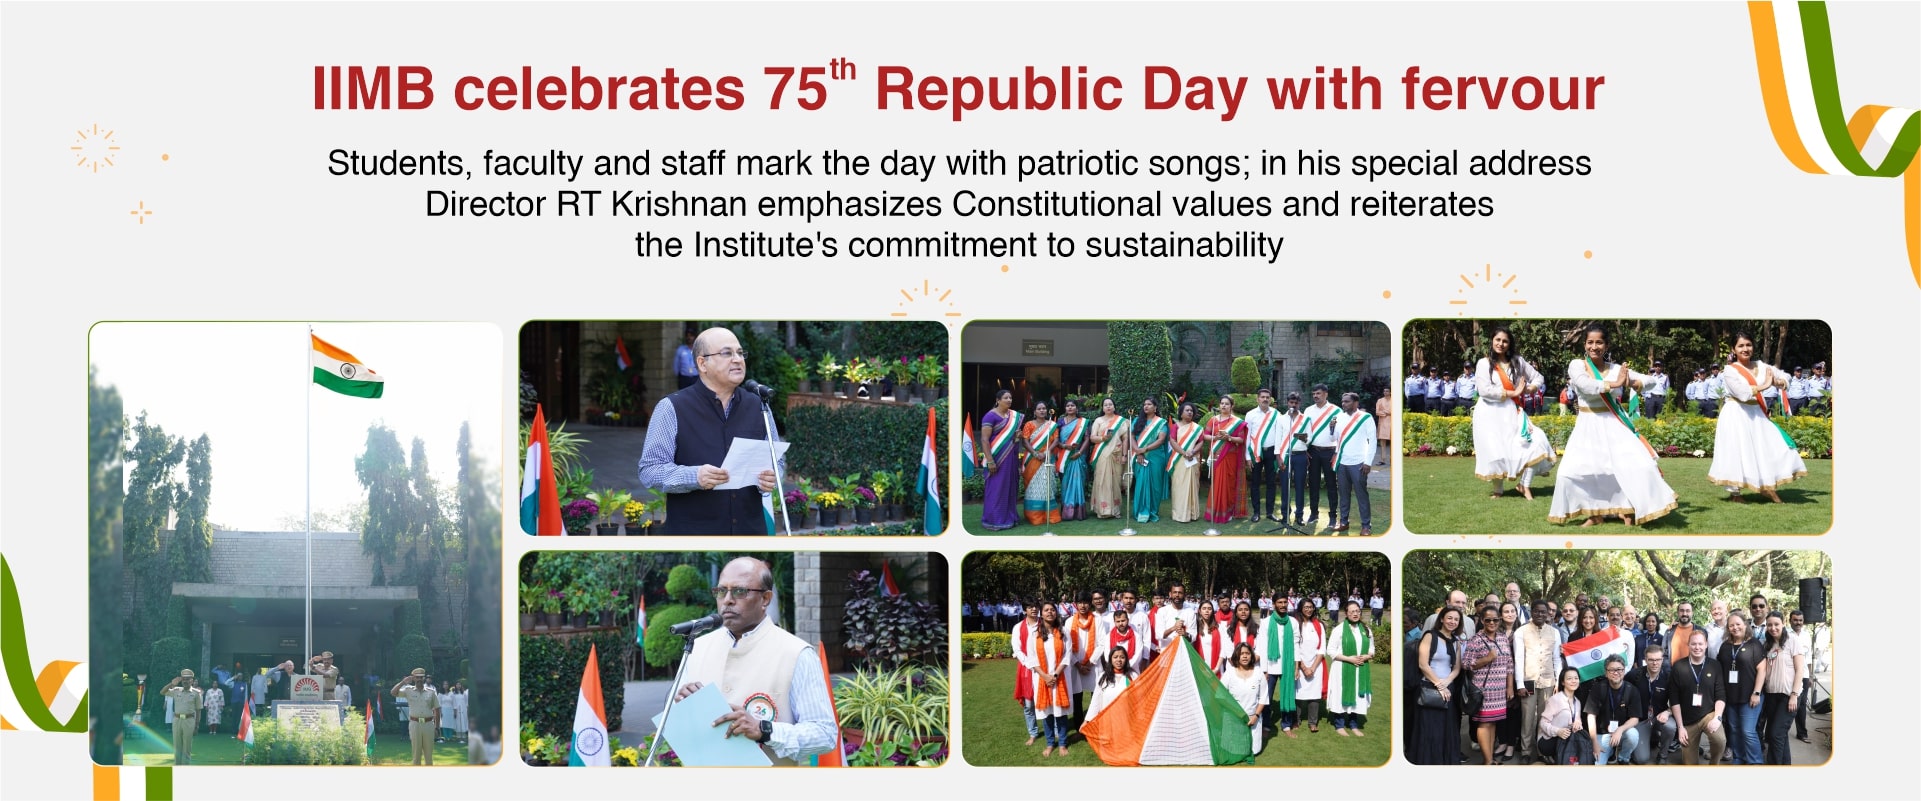 IIMB celebrates 75th Republic Day with fervour 